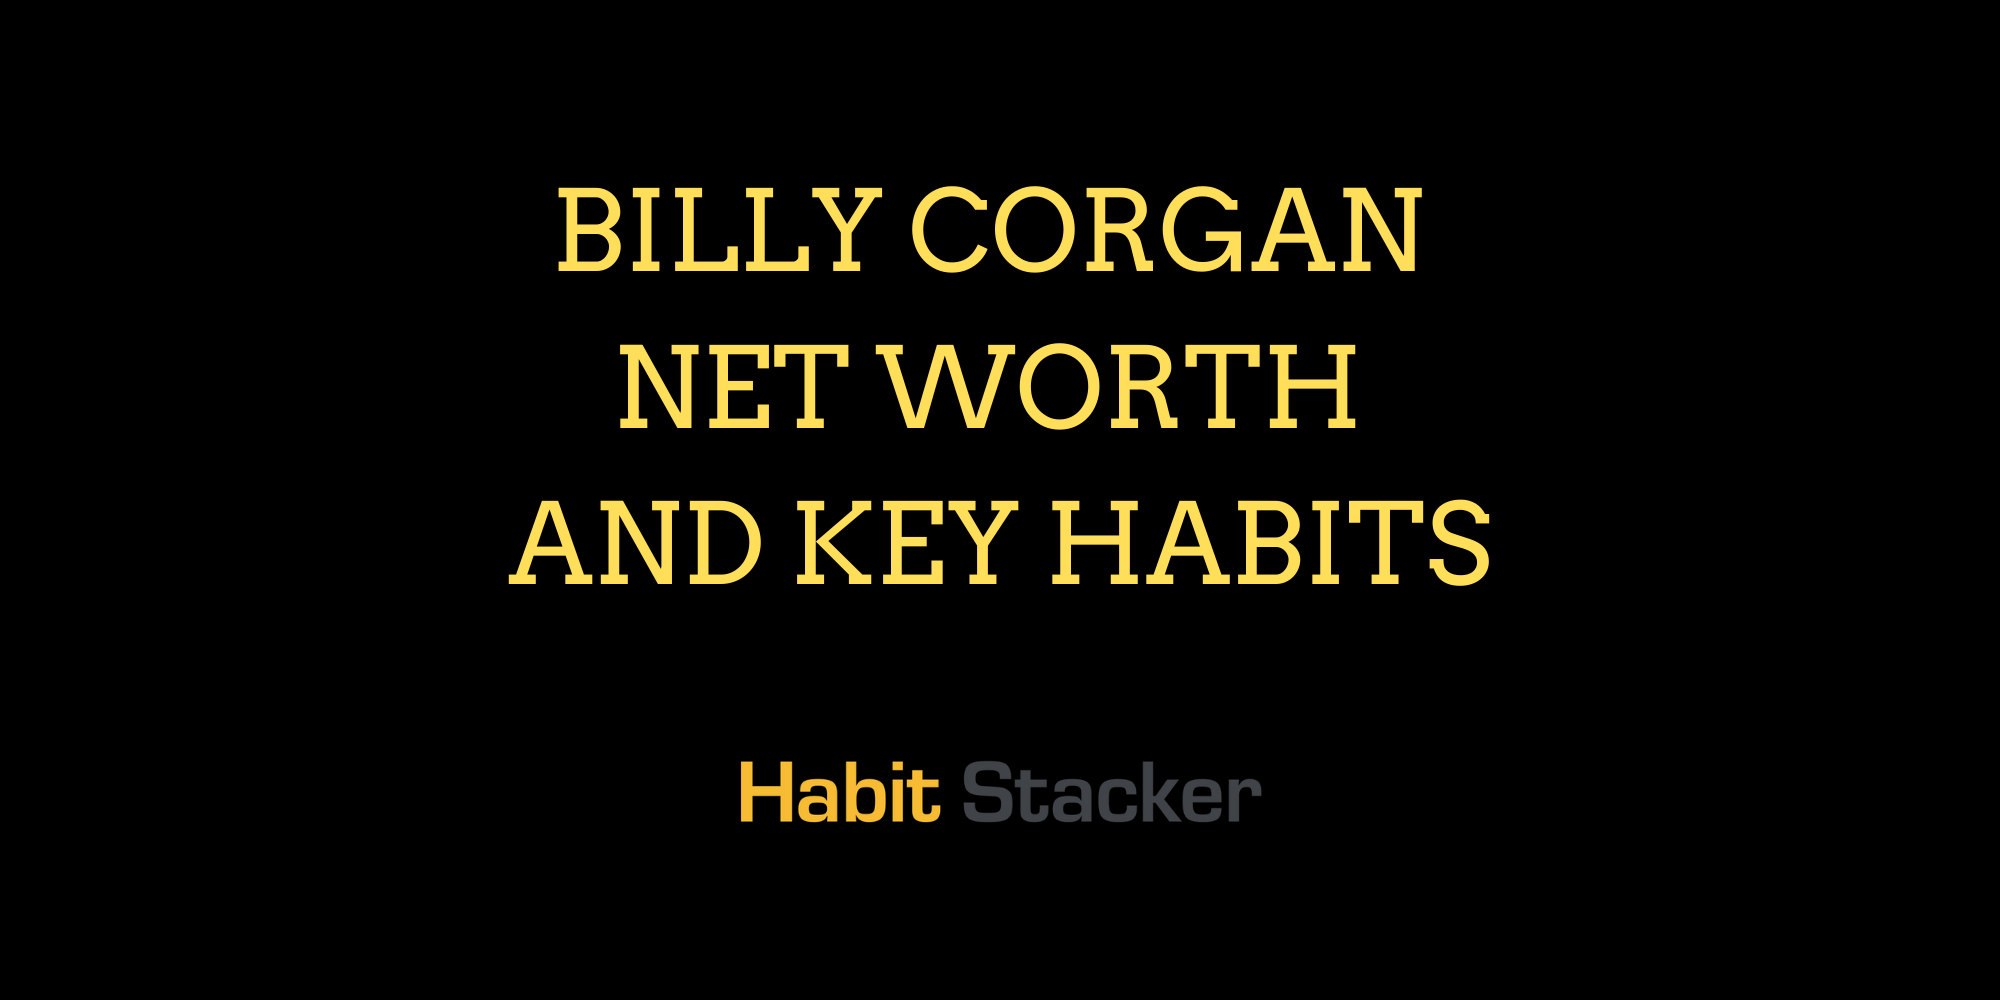 Billy Corgan Net Worth and Key Habits